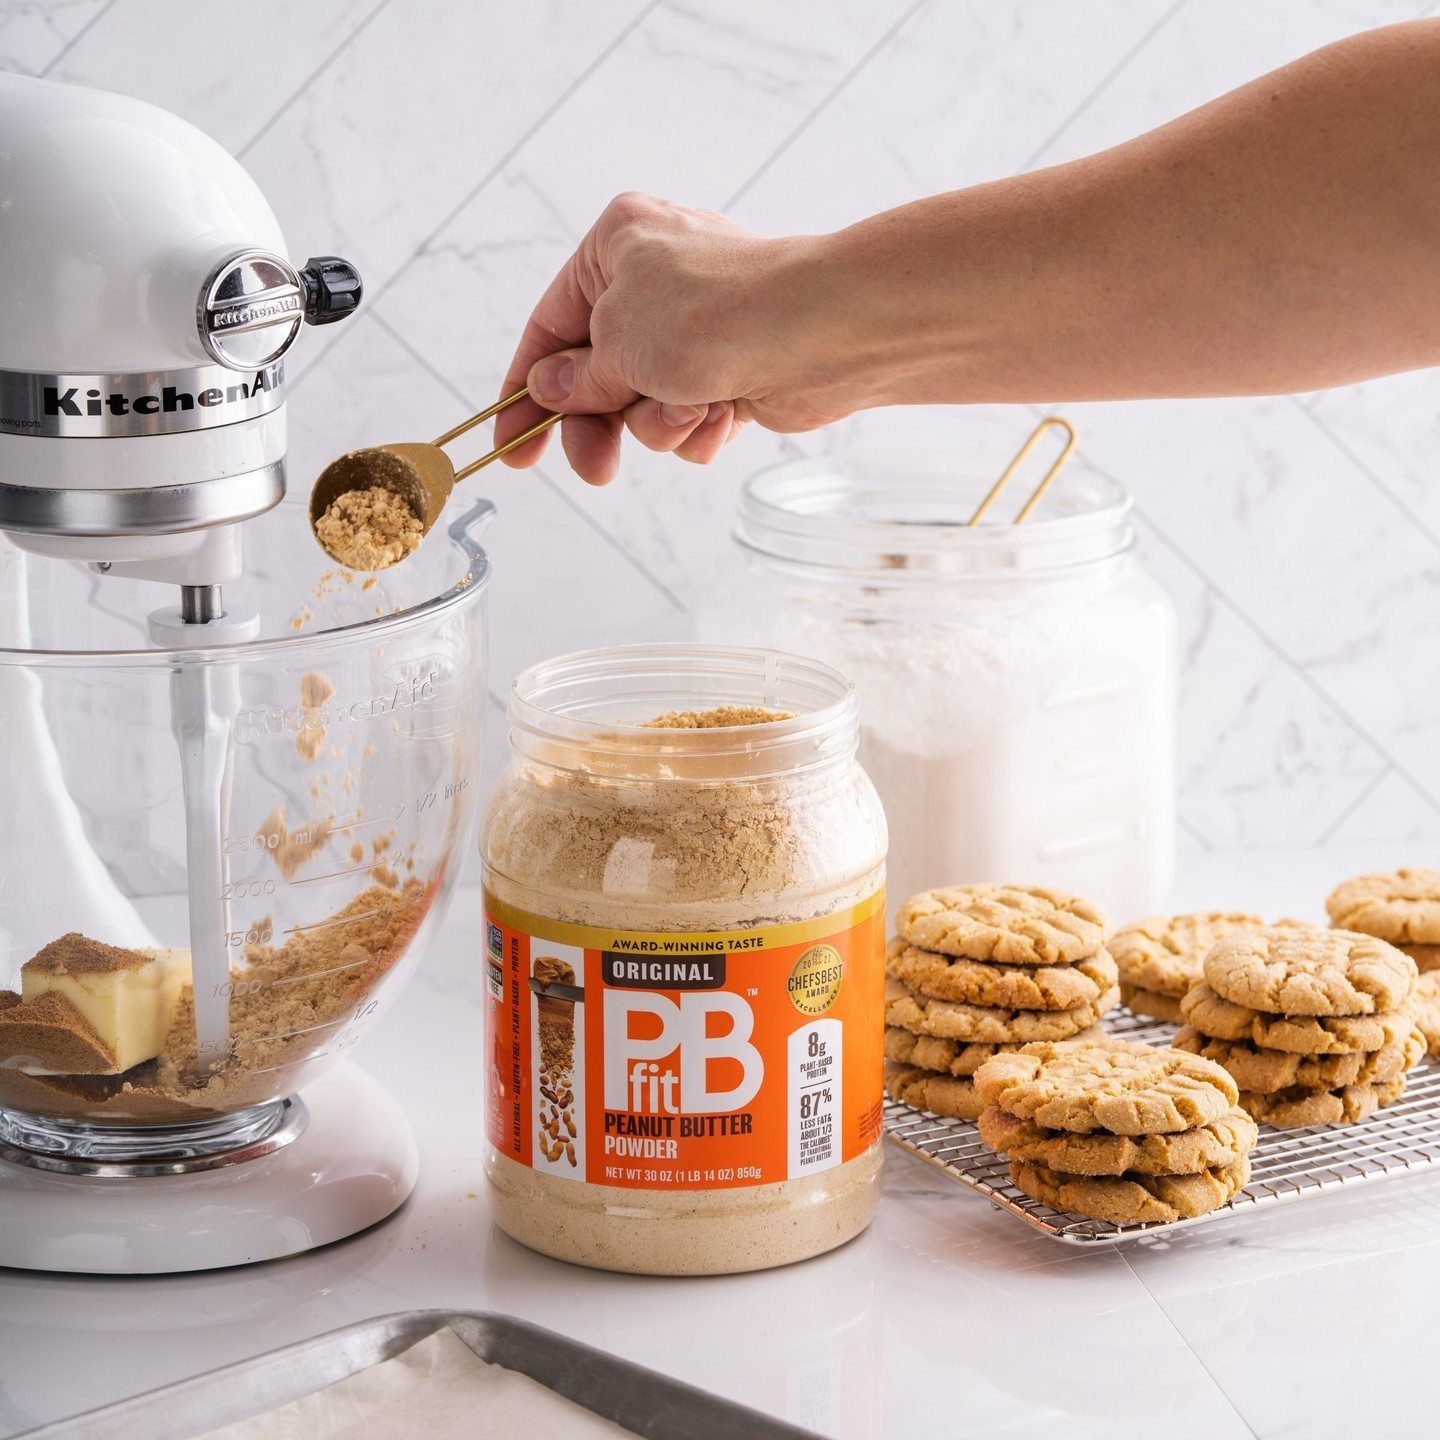 PBfit peanut butter powder cookies